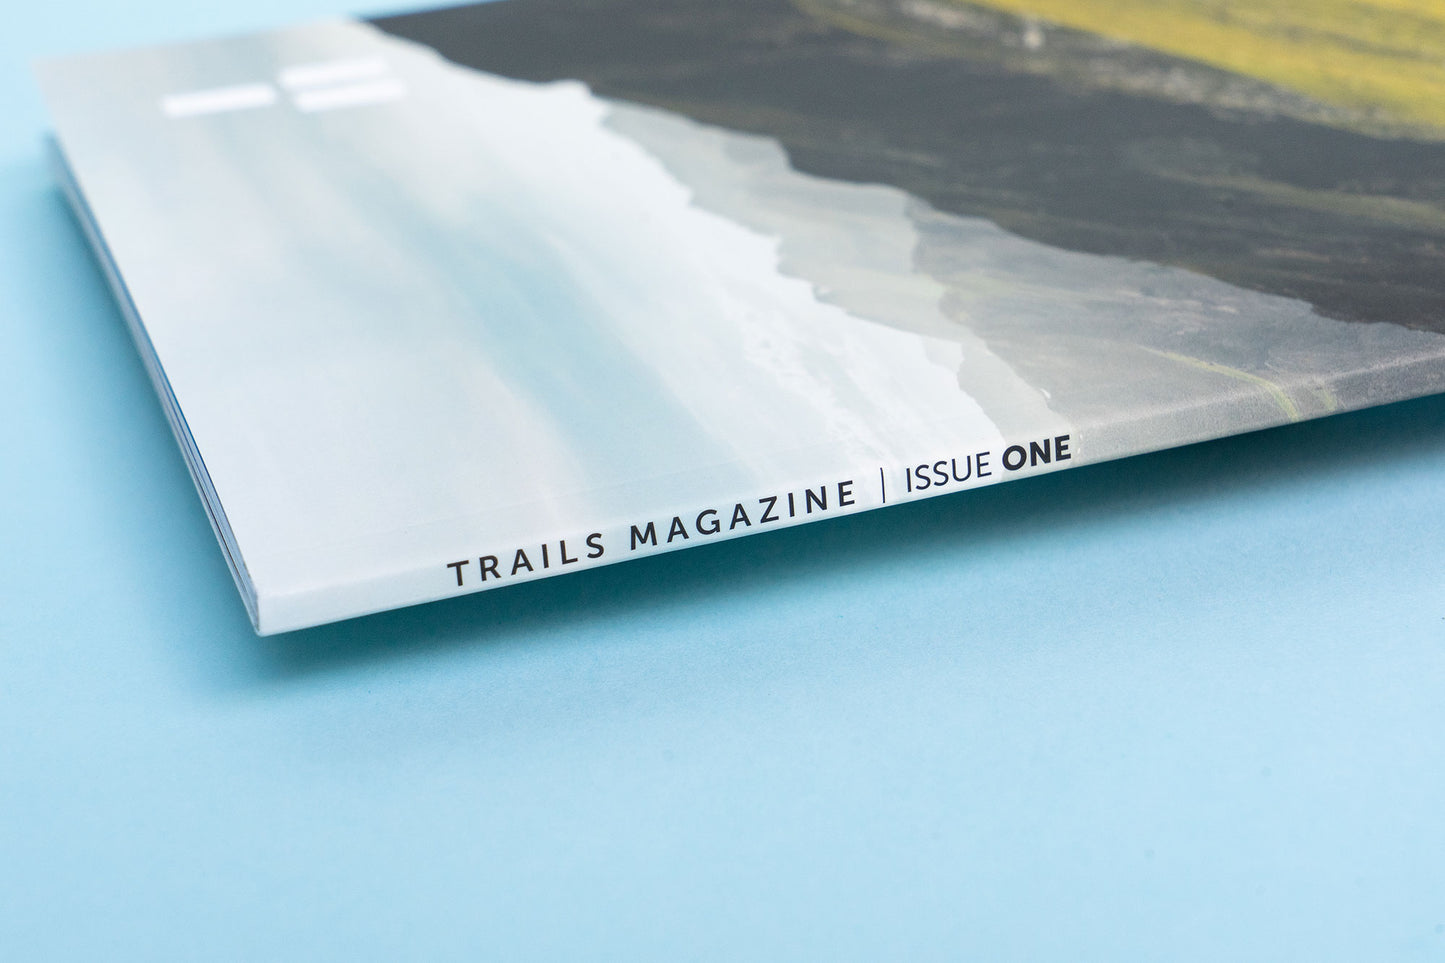 Trails Magazine Issue 1